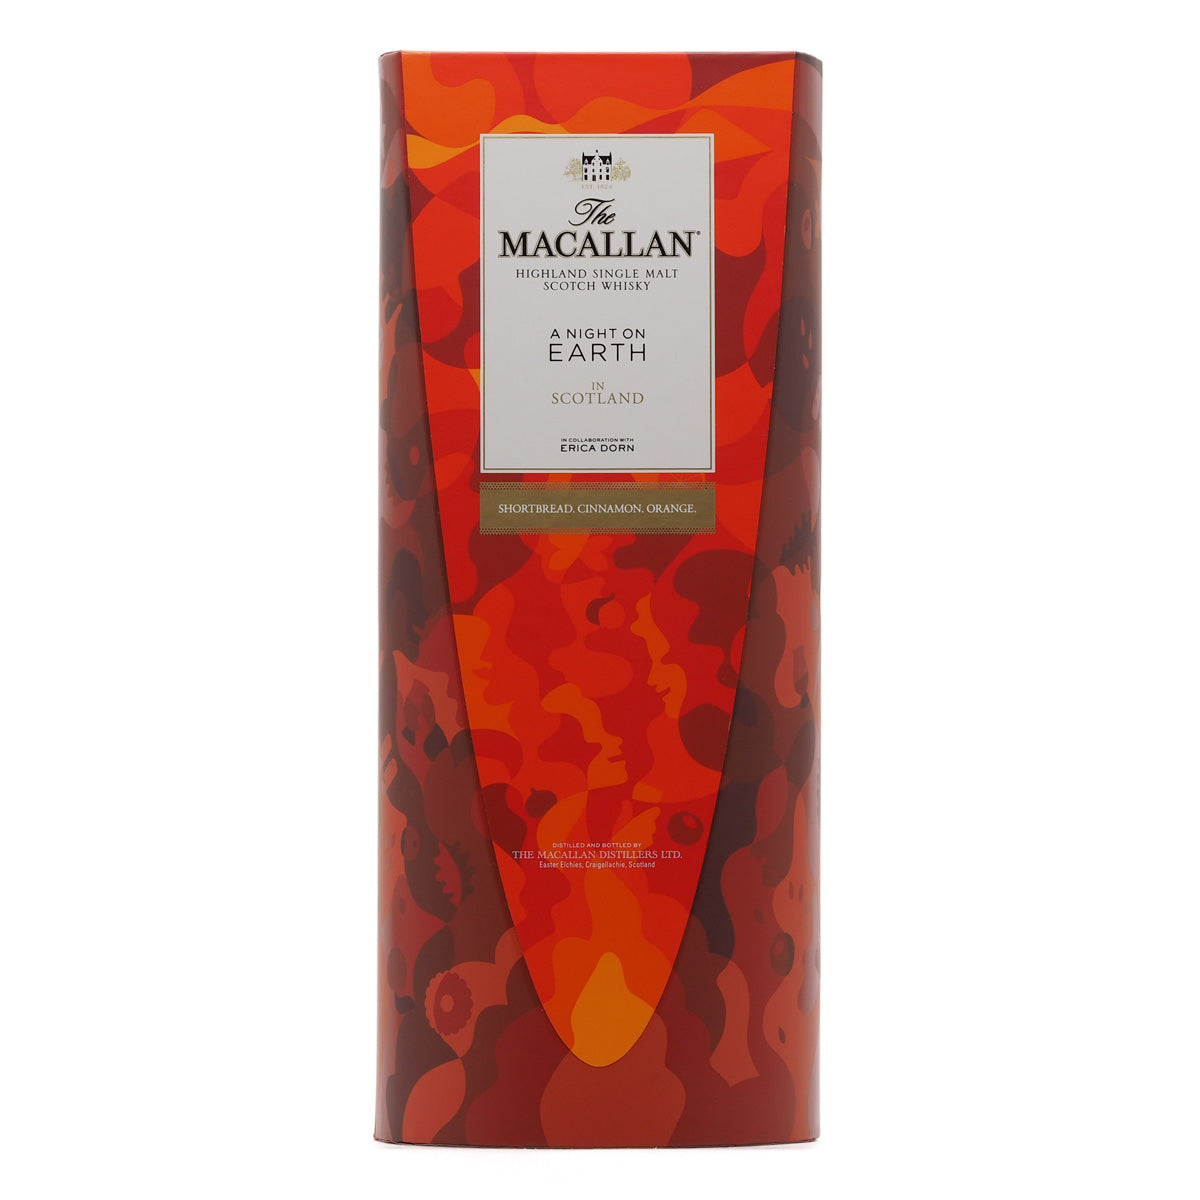 Macallan A Night on Earth in Scotland Single Malt Scotch Whisky AL 2022 (70cl) [6 bottles]